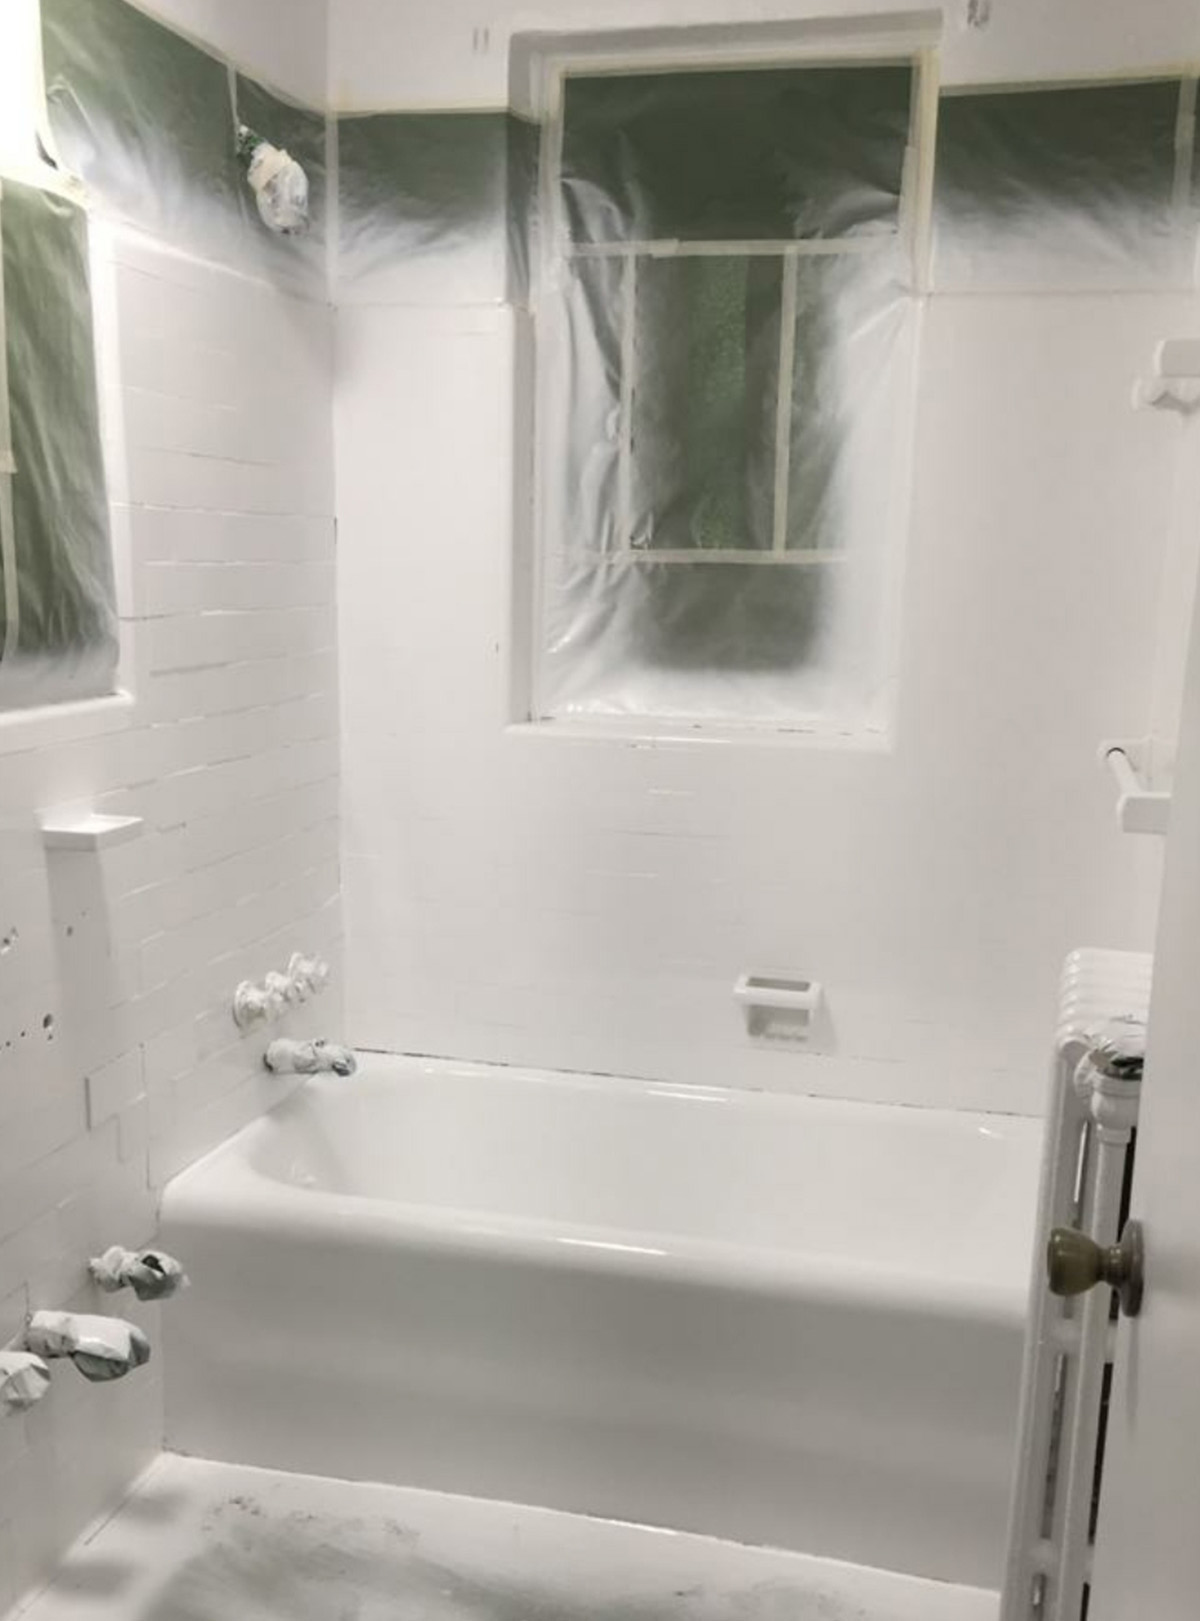 Local Norwich Shower and Bathroom Restoration